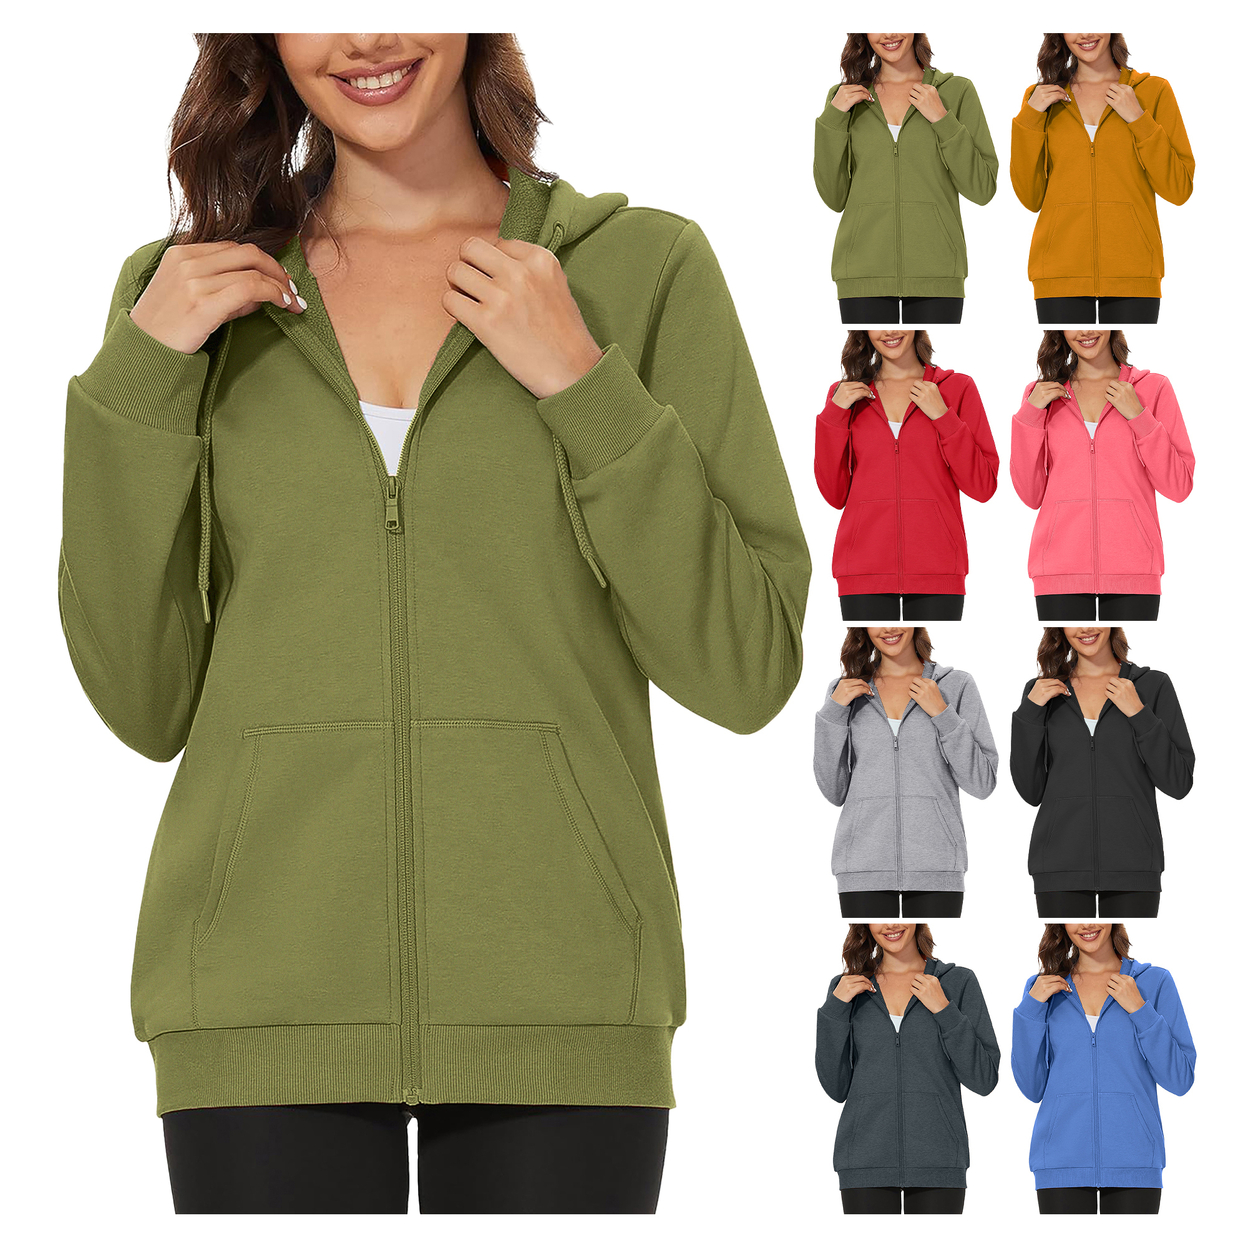 2-Pack: Women's Winter Warm Soft Blend Fleece Lined Full Zip Up Hoodie - Black & Blue, Large